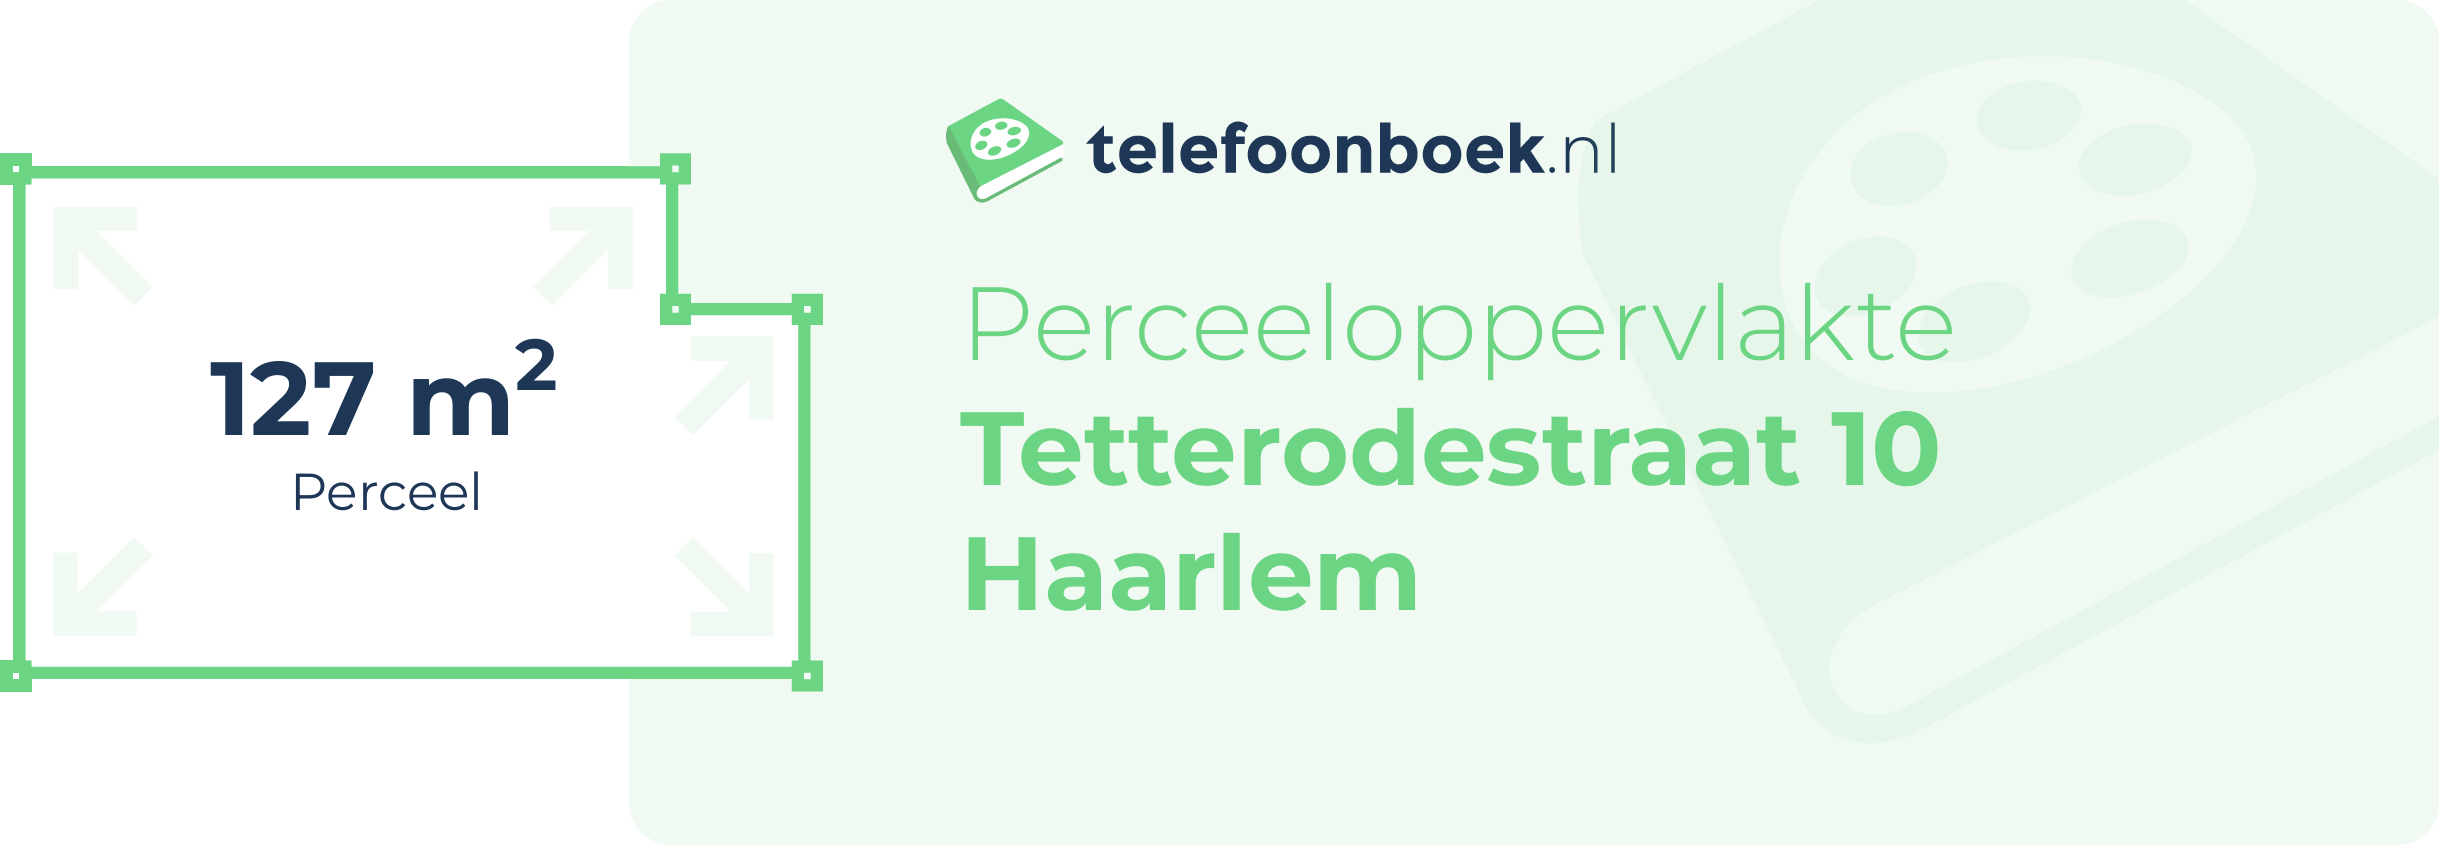 Perceeloppervlakte Tetterodestraat 10 Haarlem